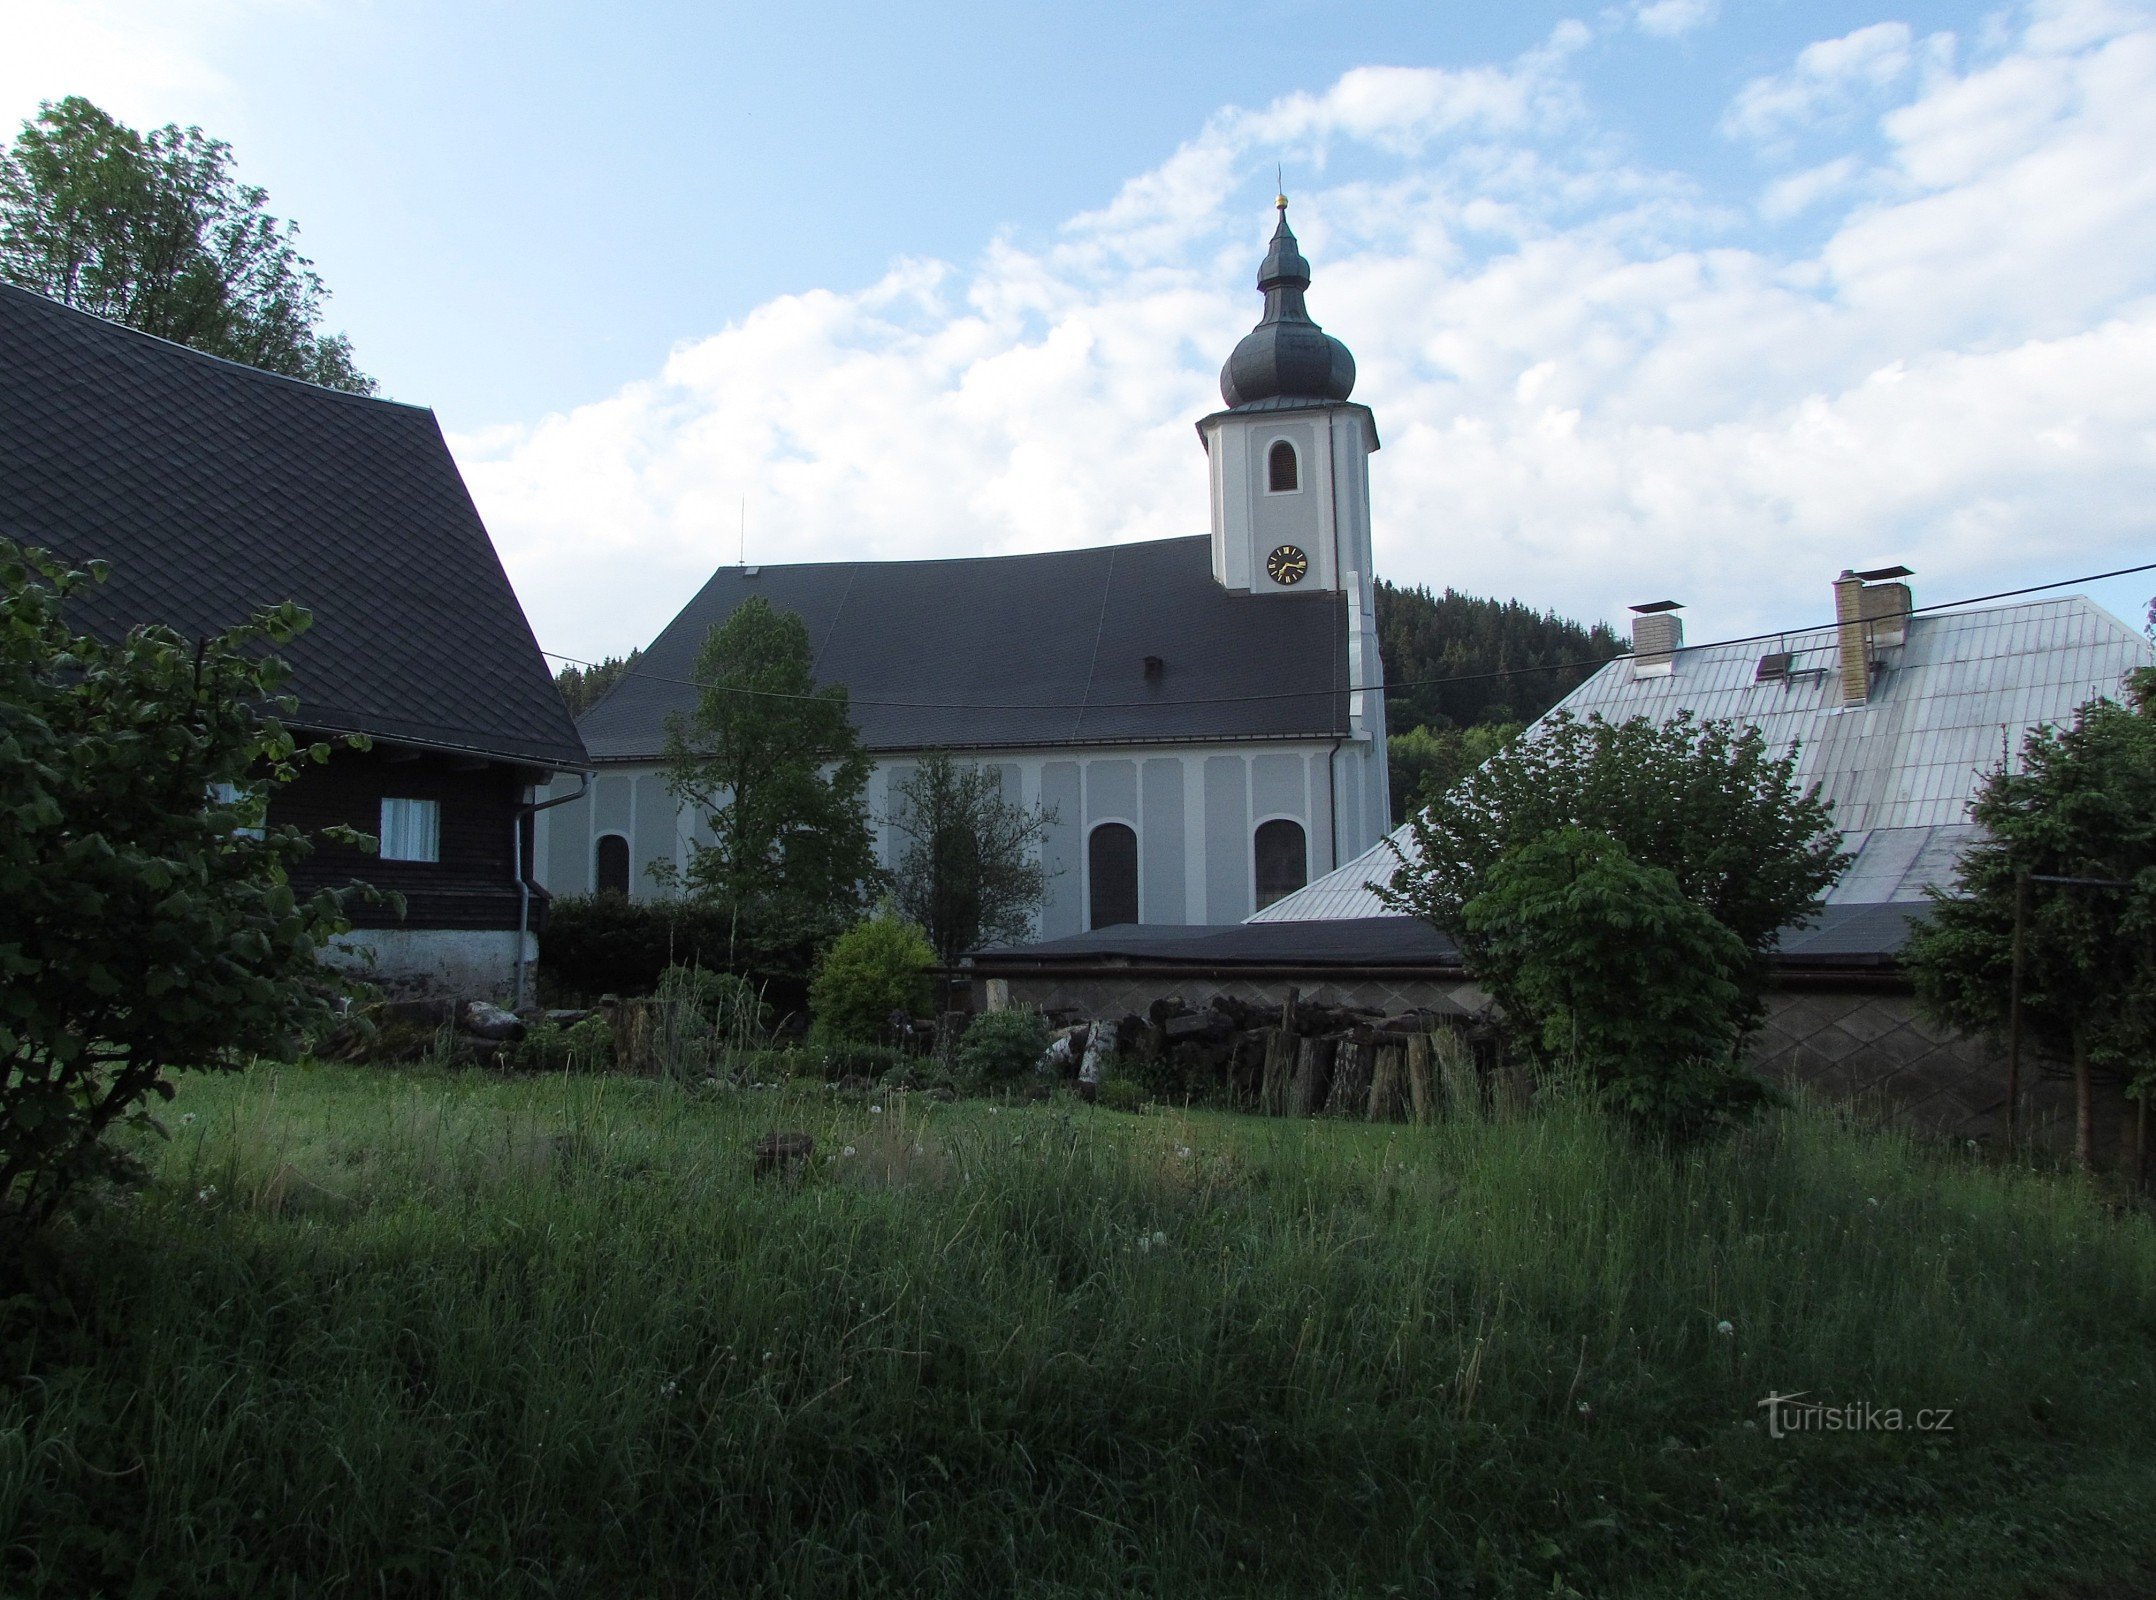 Heřmanovice - St.-Andreas-Kirche und andere sakrale Denkmäler